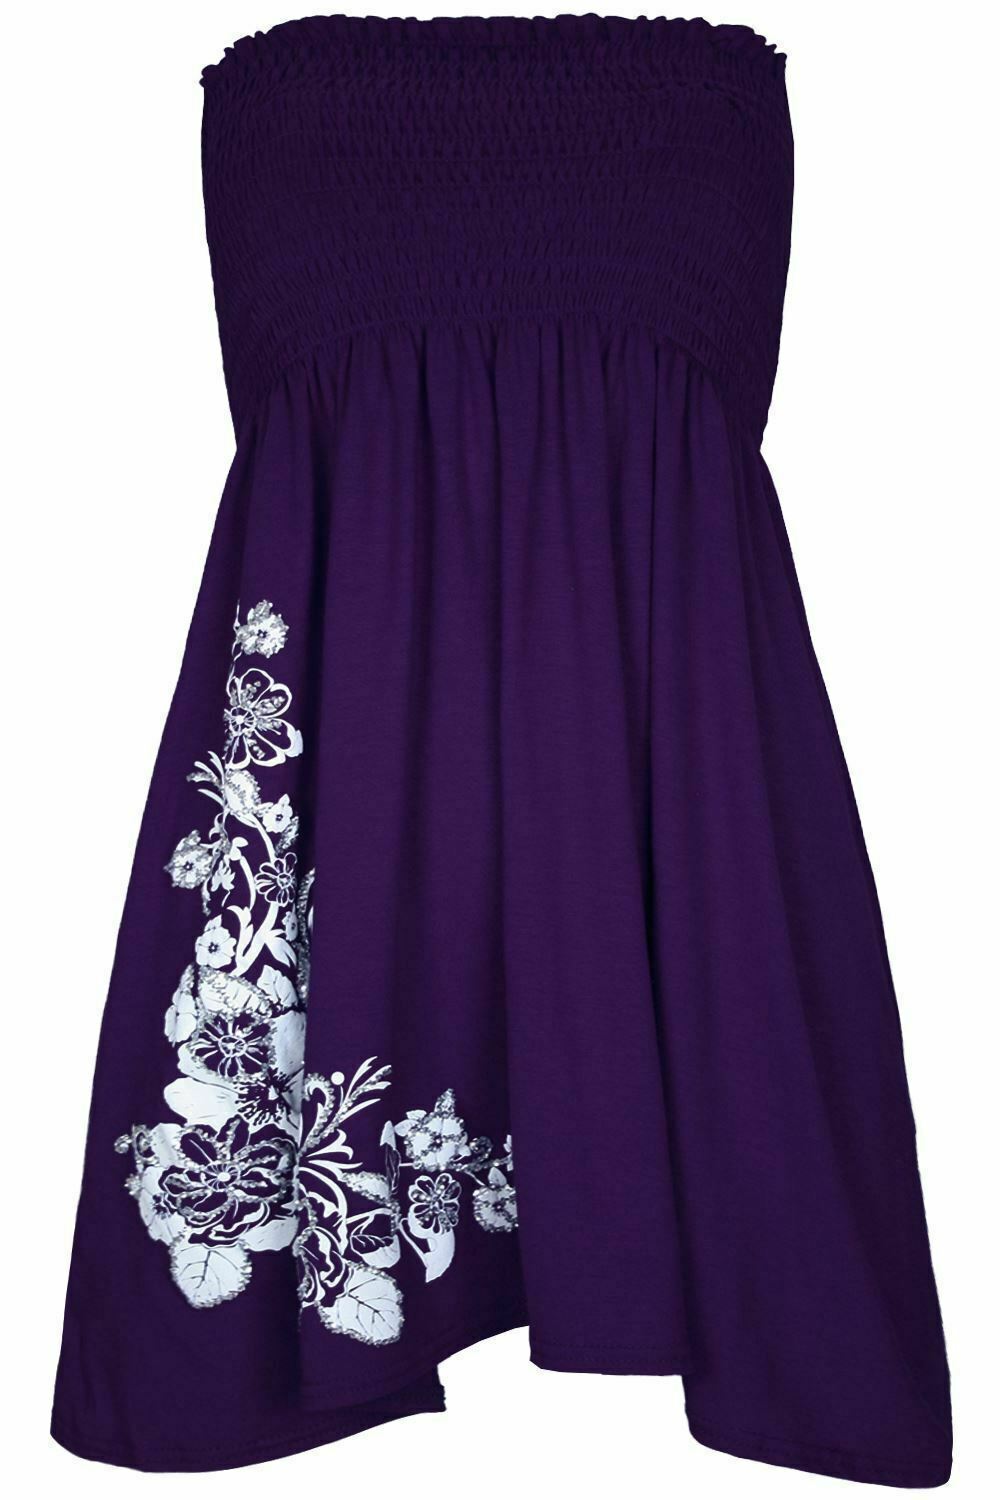 Ladies Purple & White Flower Boob Tube Short Style Dress.